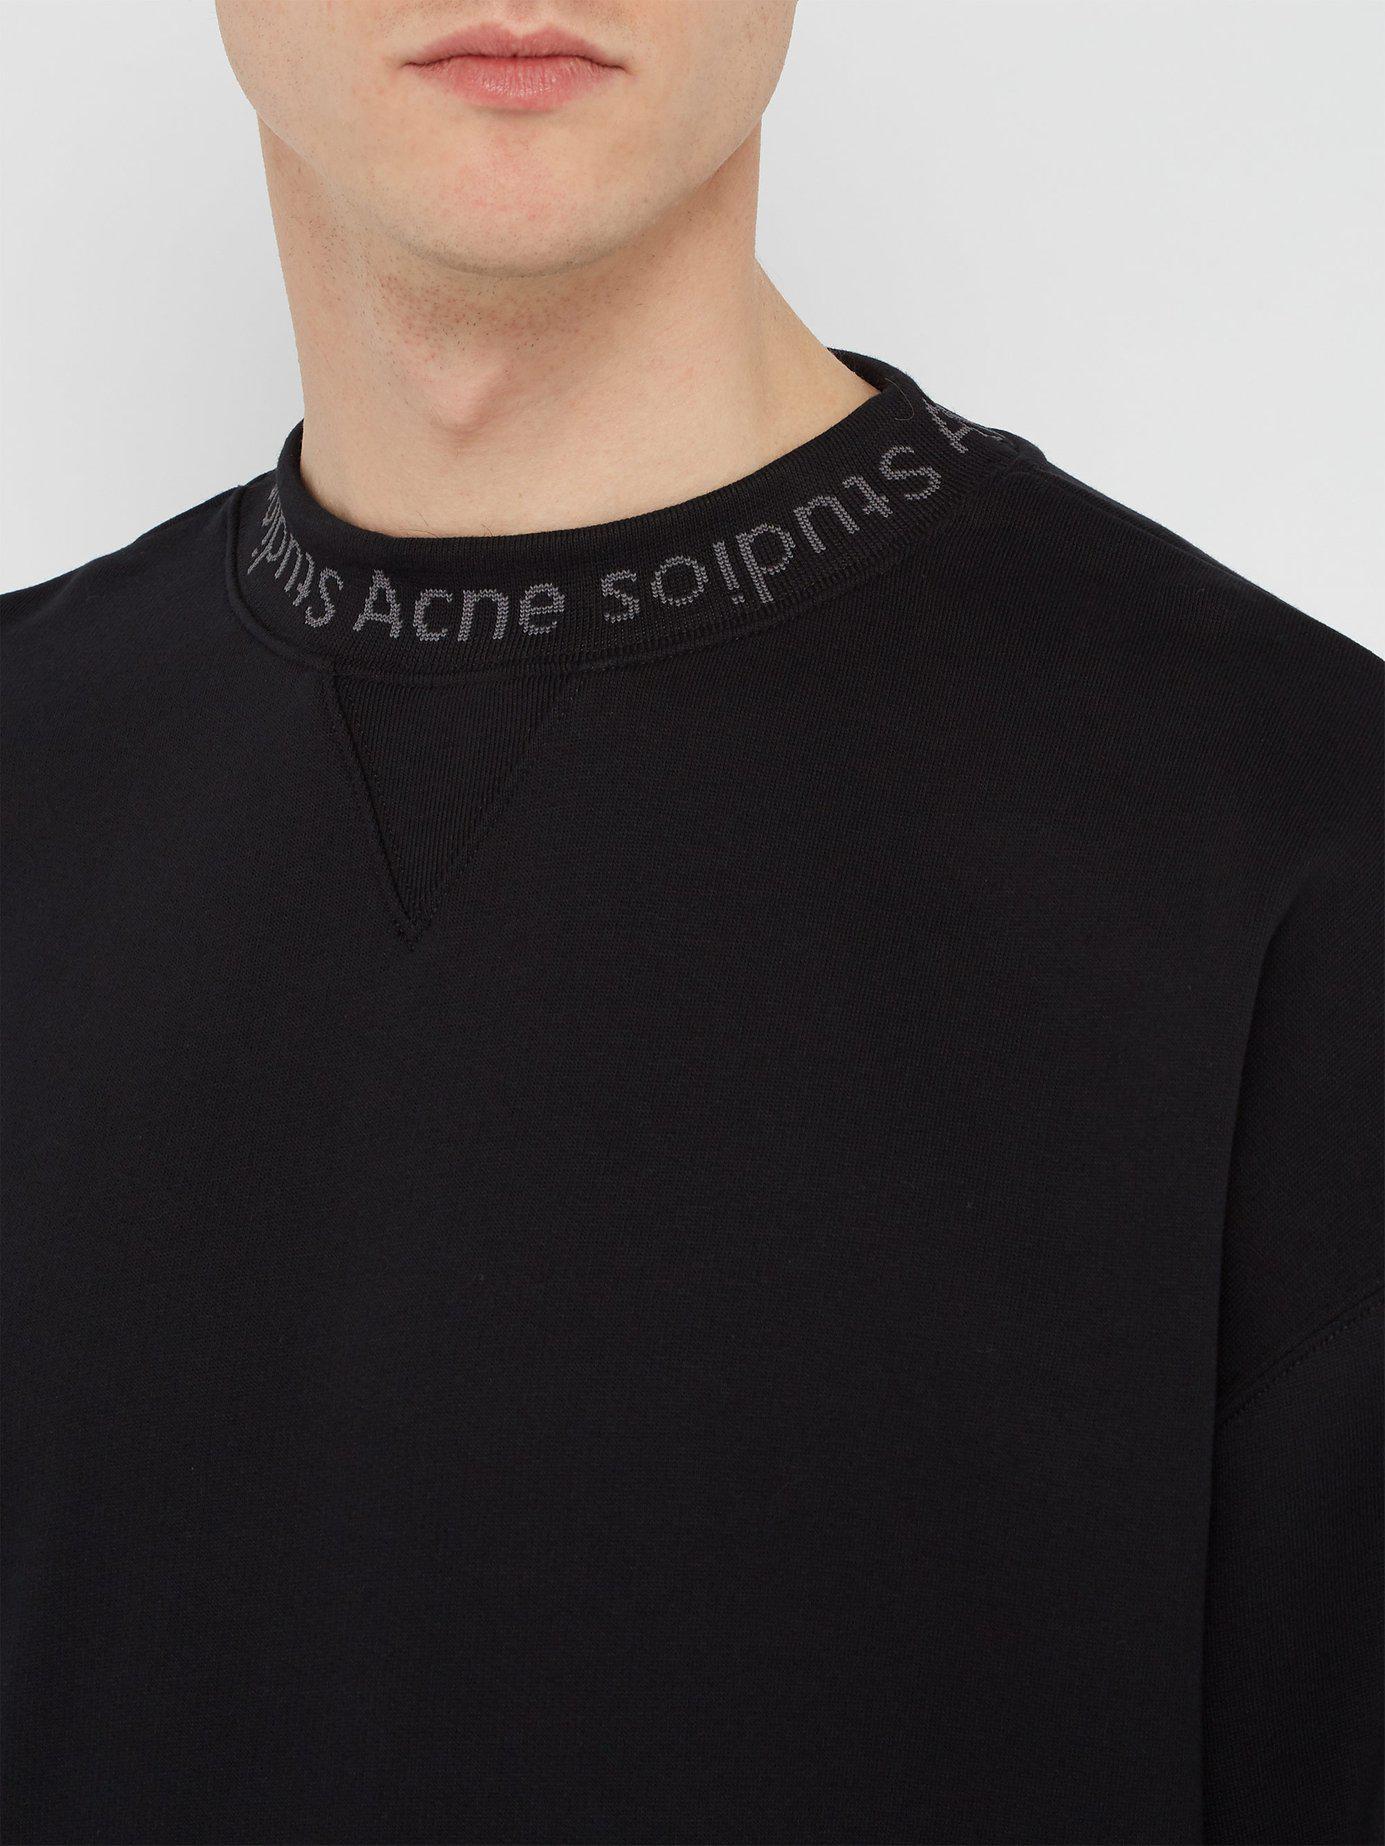 Acne Studios Cotton Flogho Black Logo Crewneck Sweatshirt for Men - Lyst